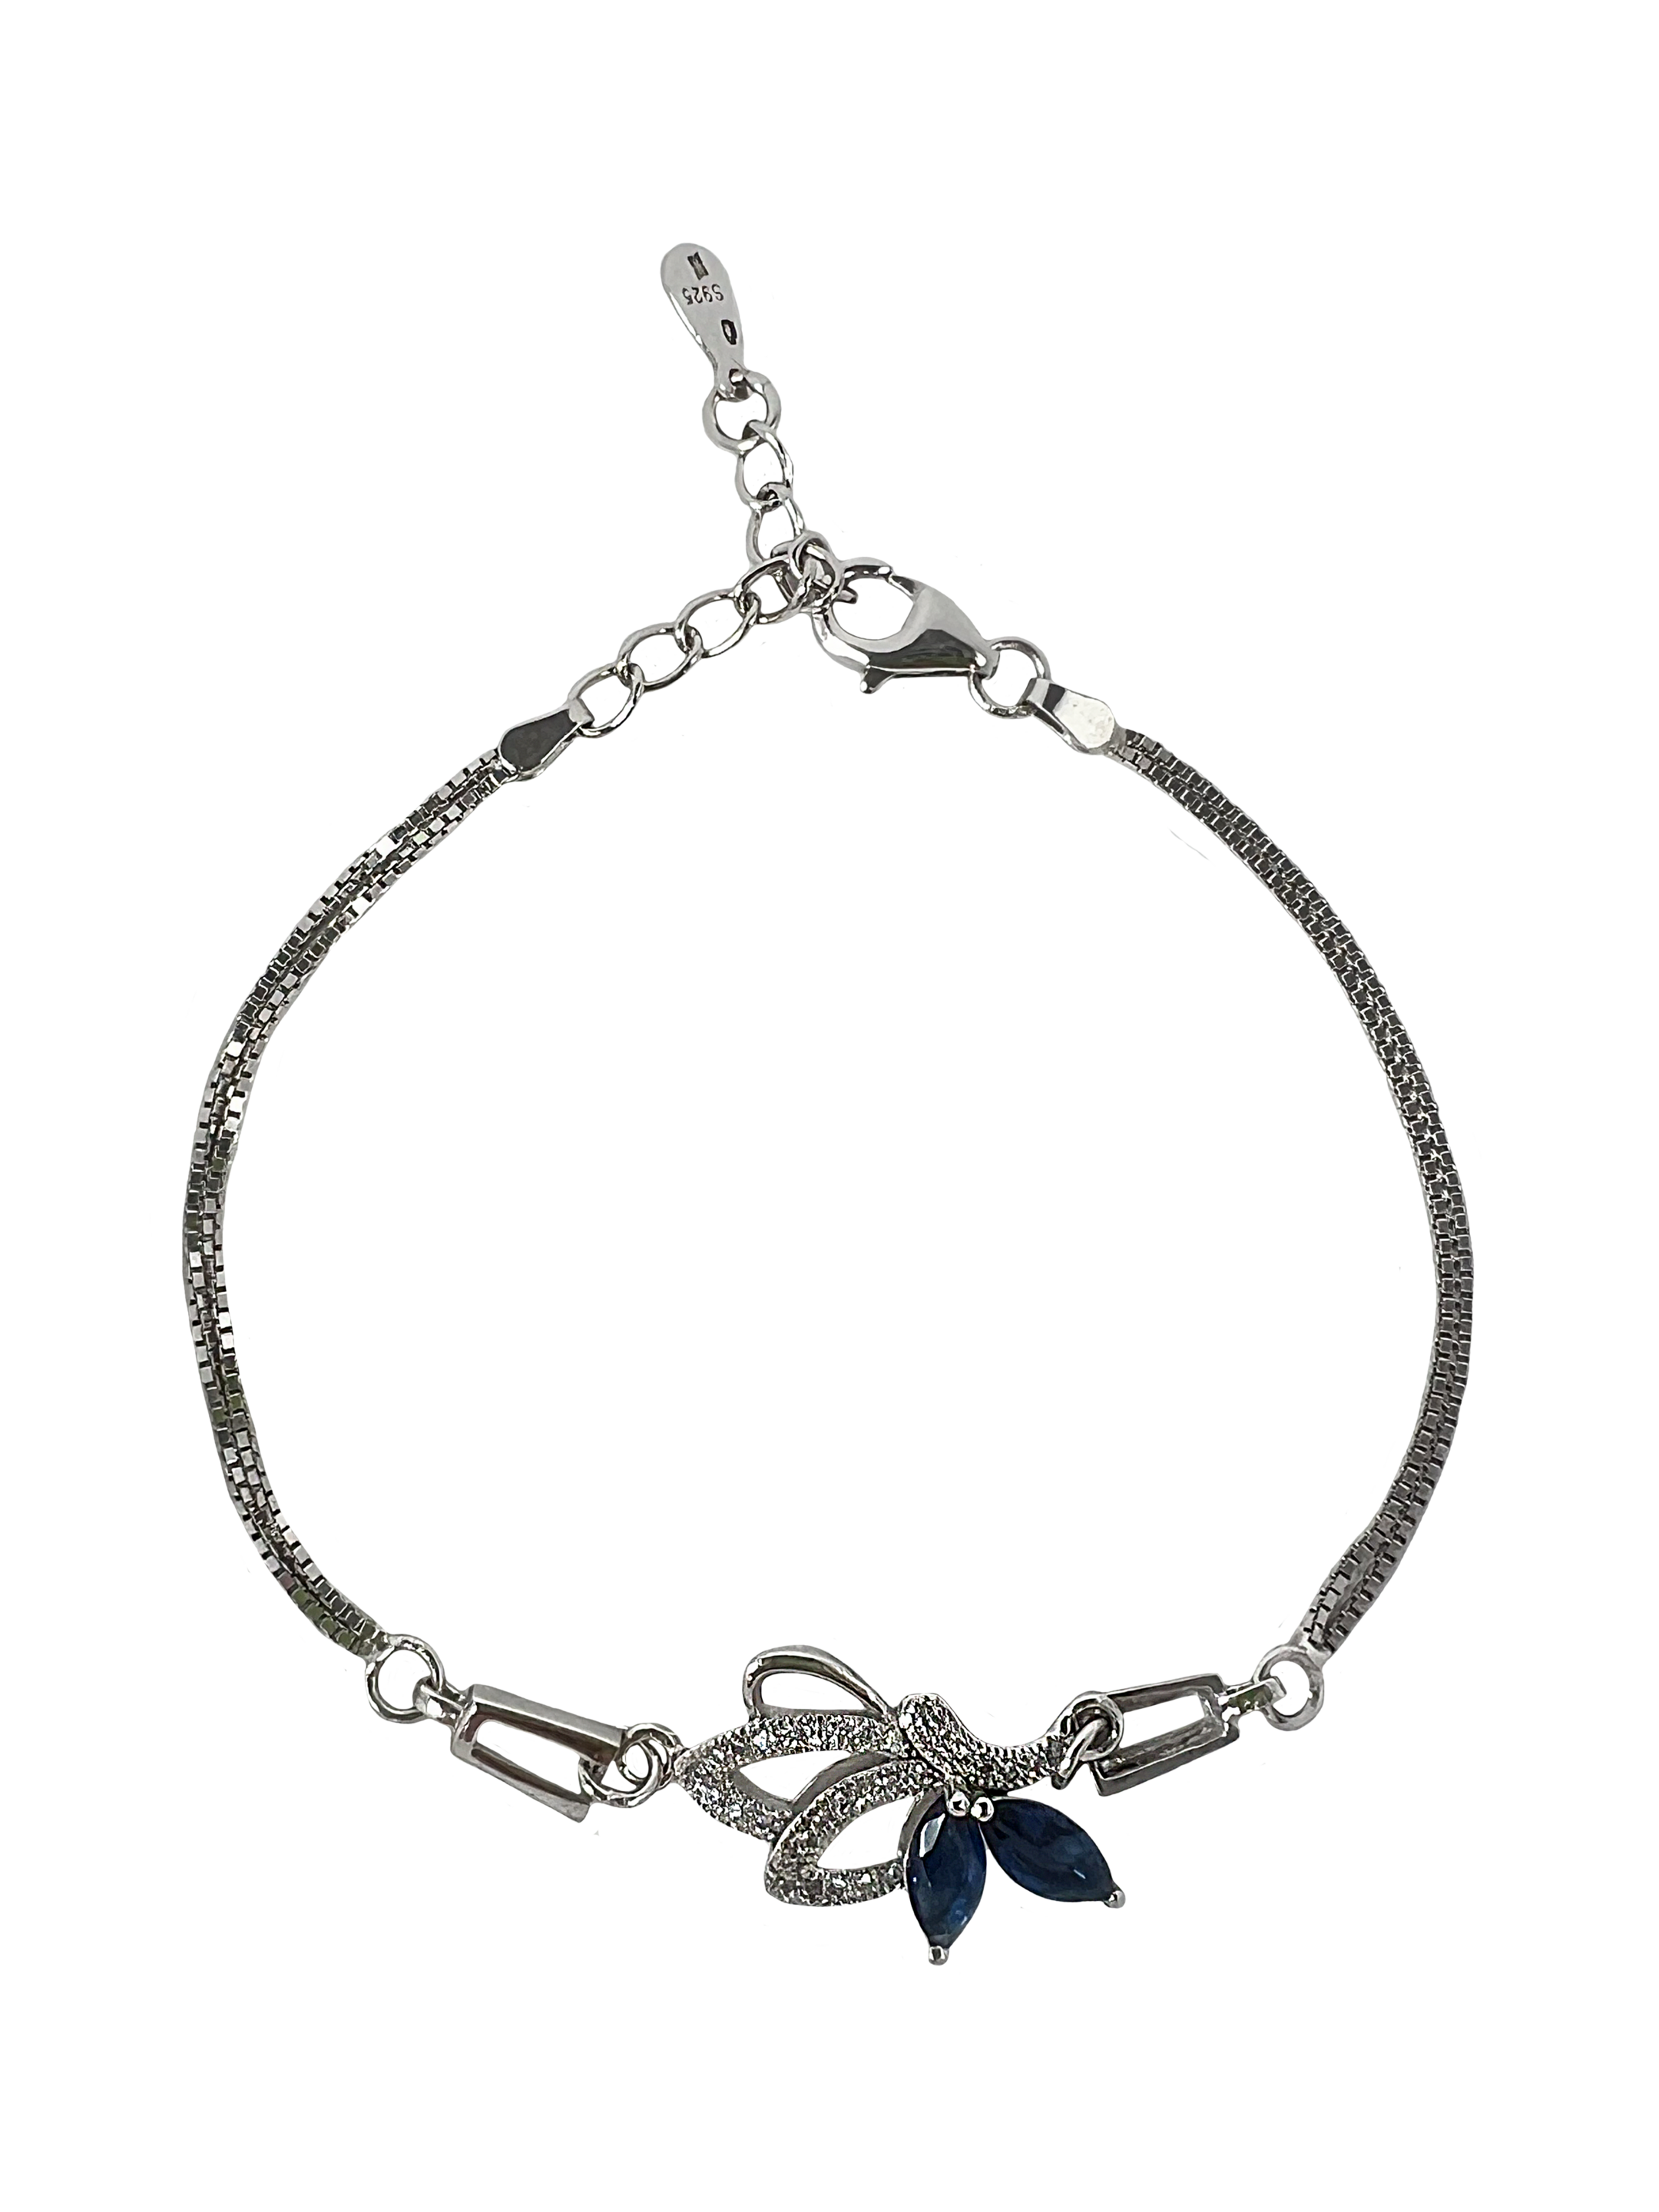 Silver bracelet with dark blue crystals